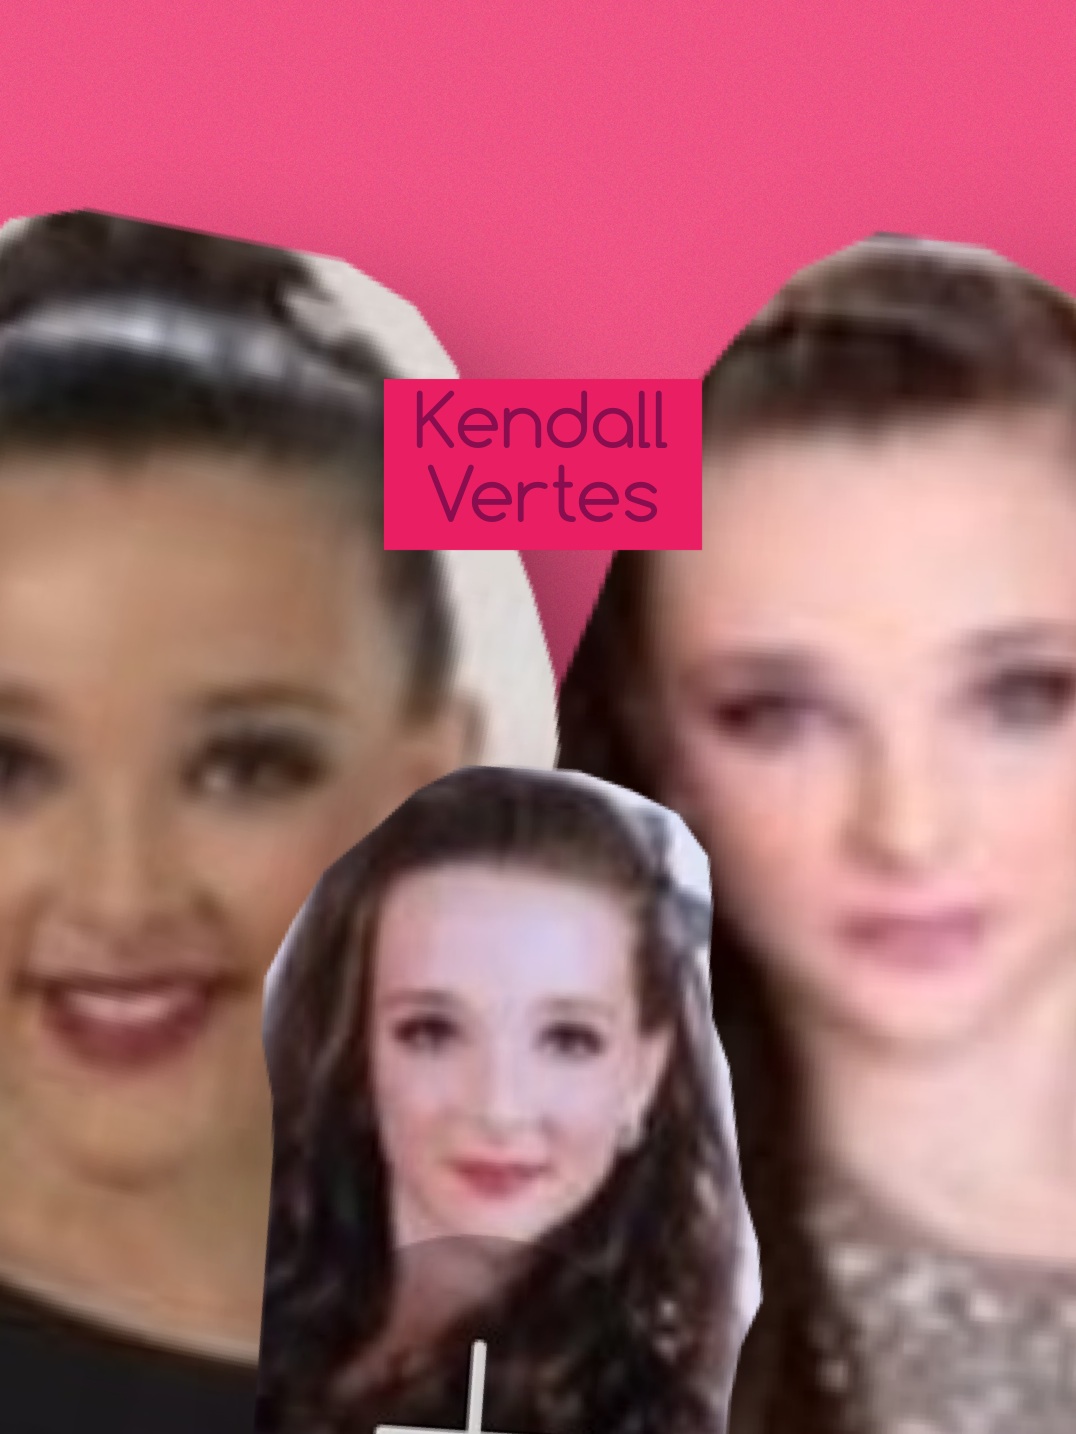 Kendall
Vertes
